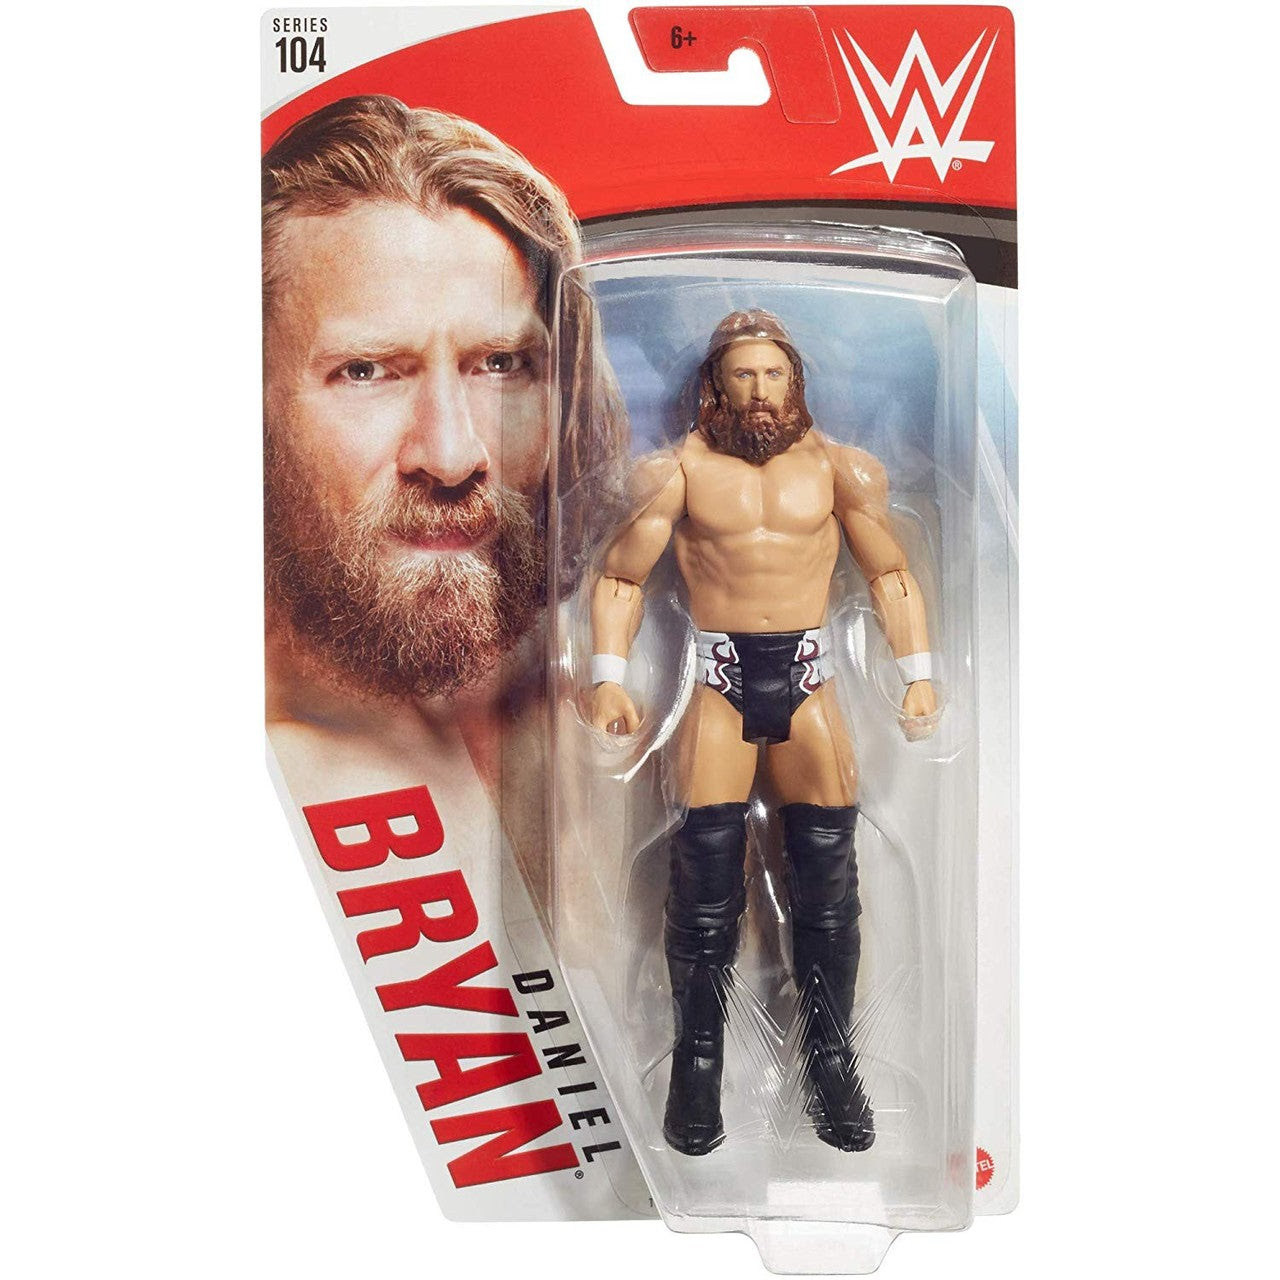 Image of WWE Basic Figure Series 104 - Daniel Bryan